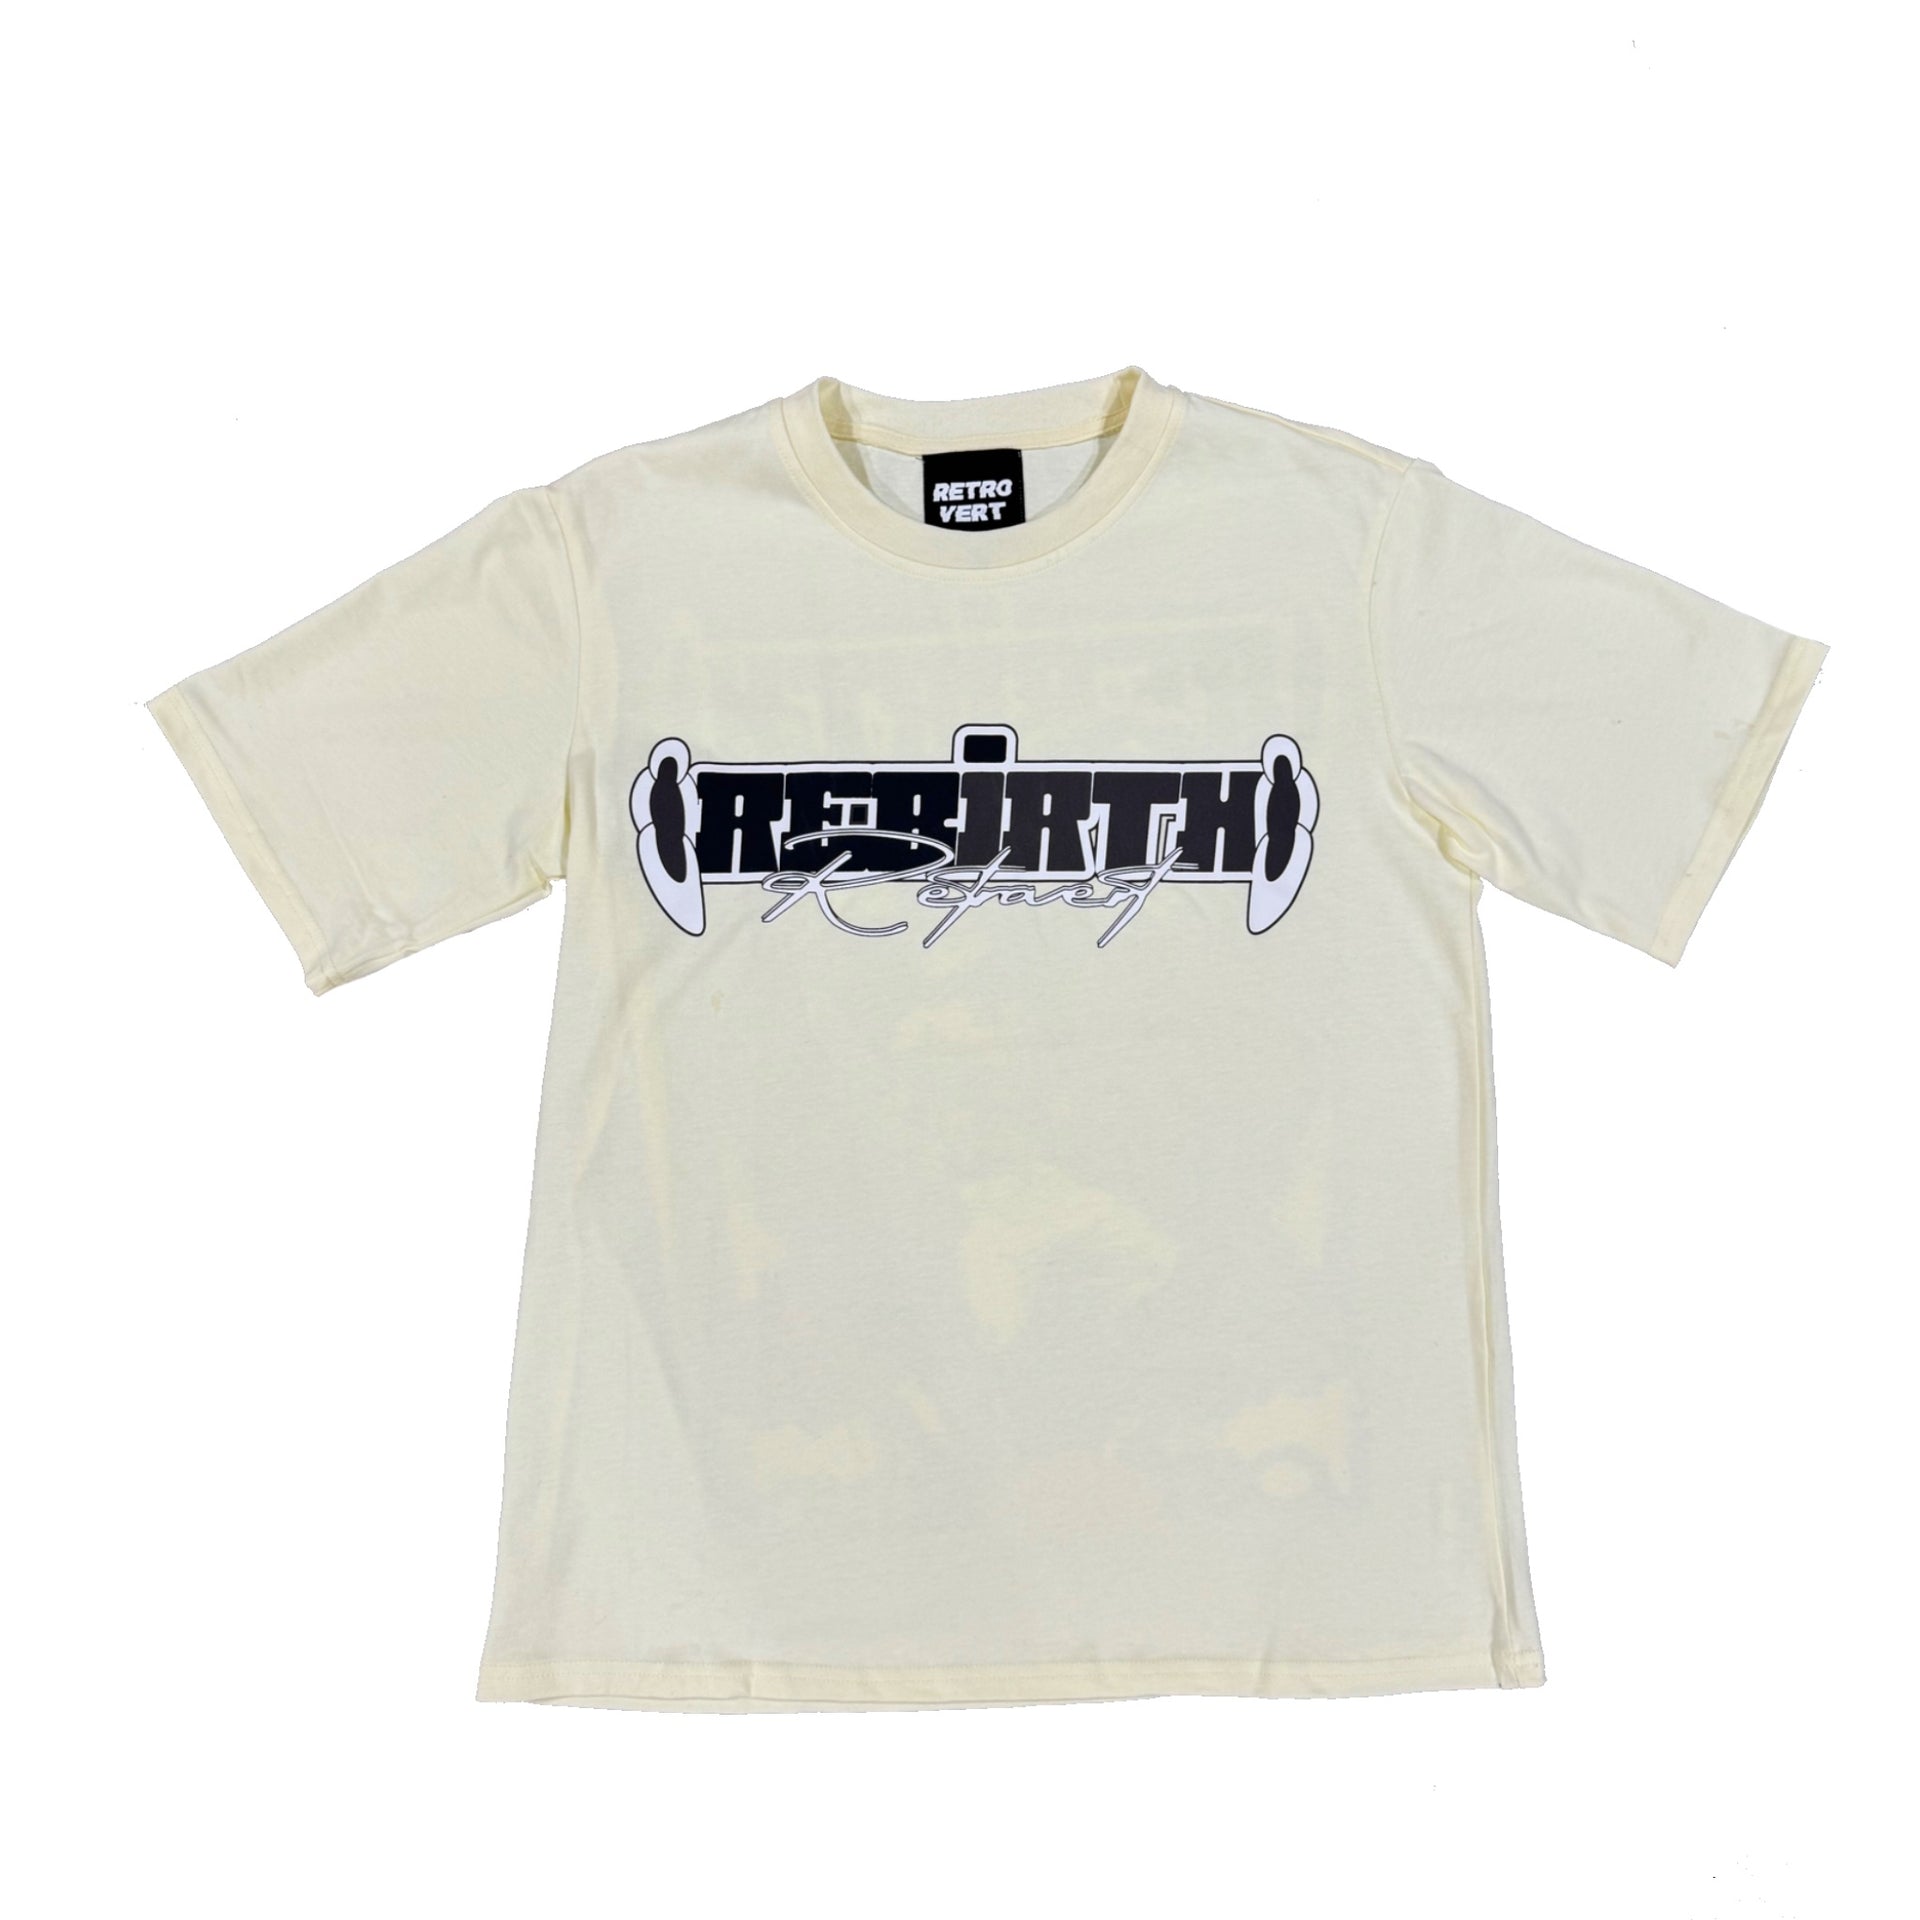 Rebirth T-shirt - Sail